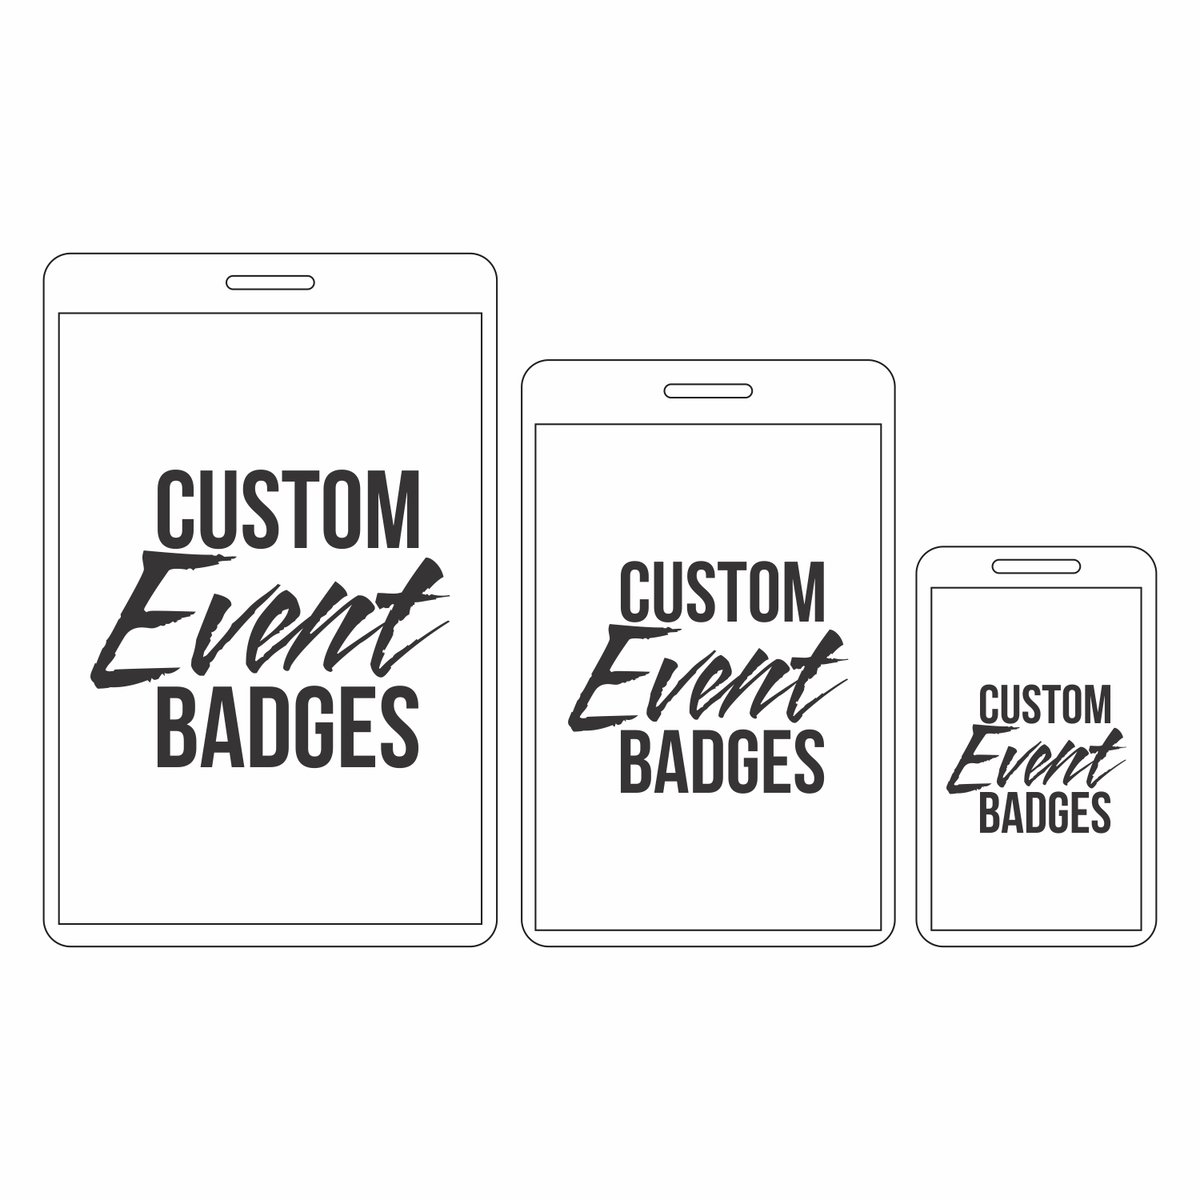 Image of Custom Event Badges